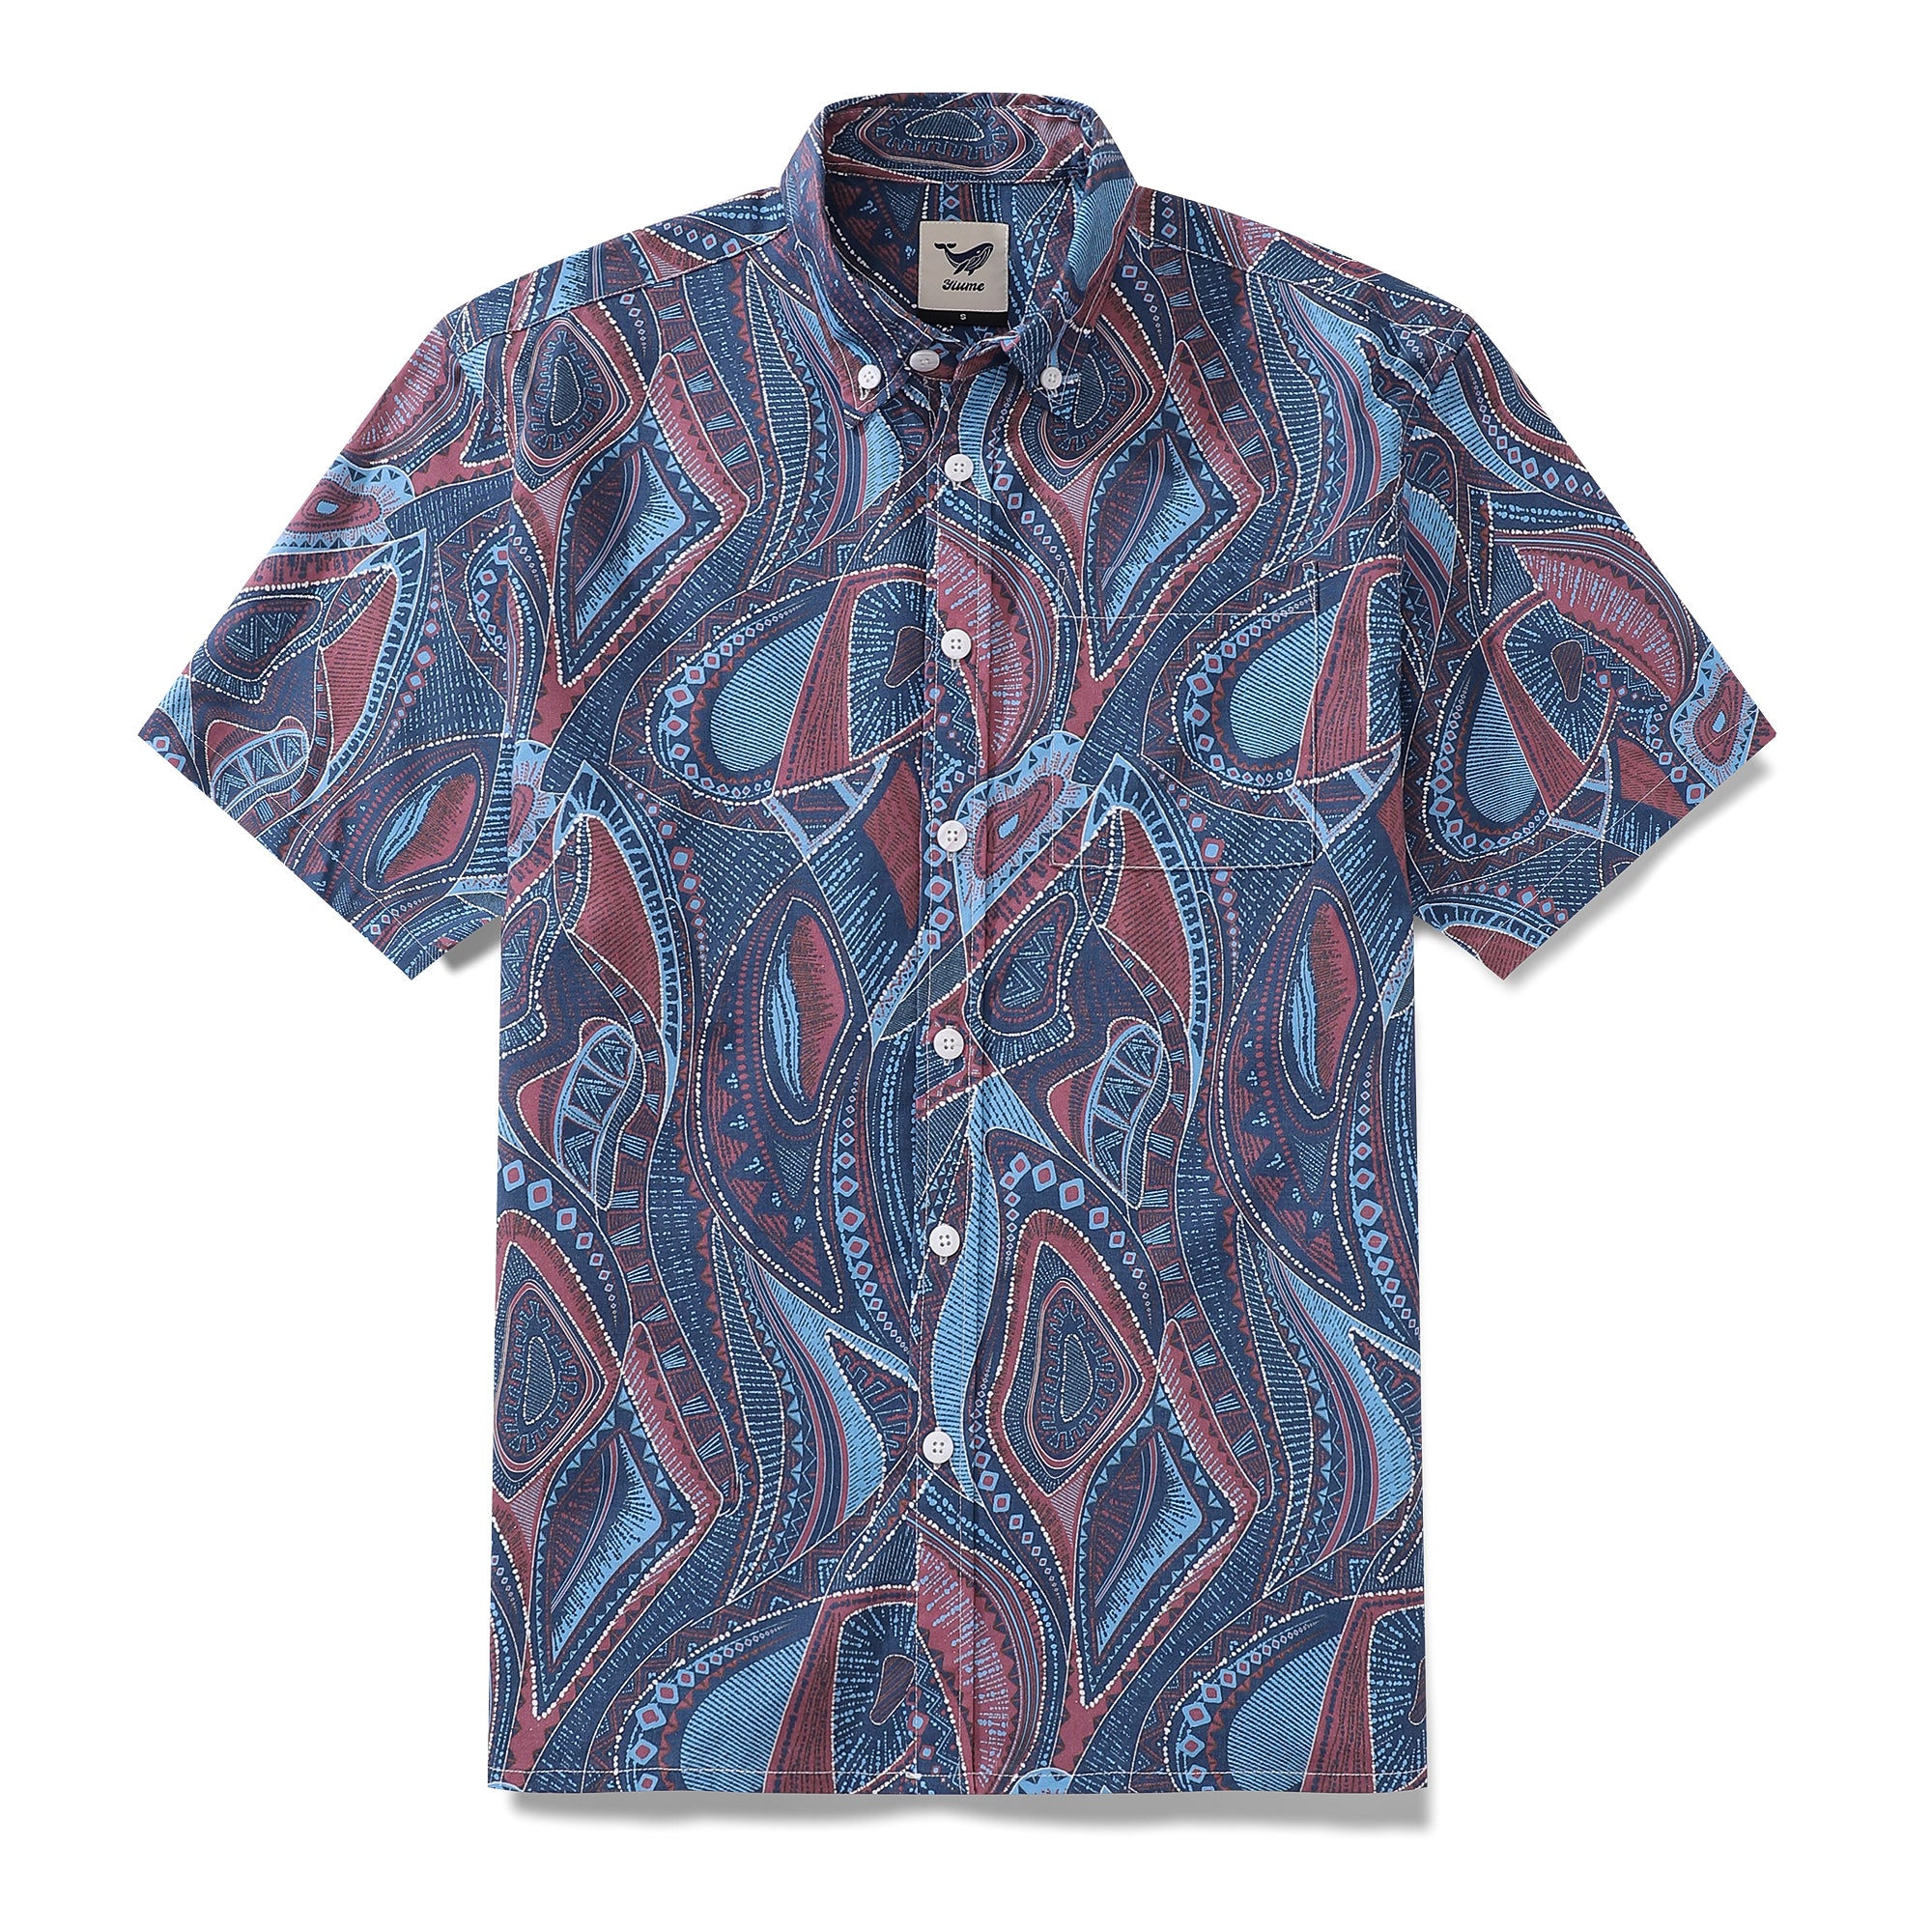 1960s Vintage Men's Hawaiian Shirt Abstract City Print Cotton Button-down Short Sleeve Aloha Shirt